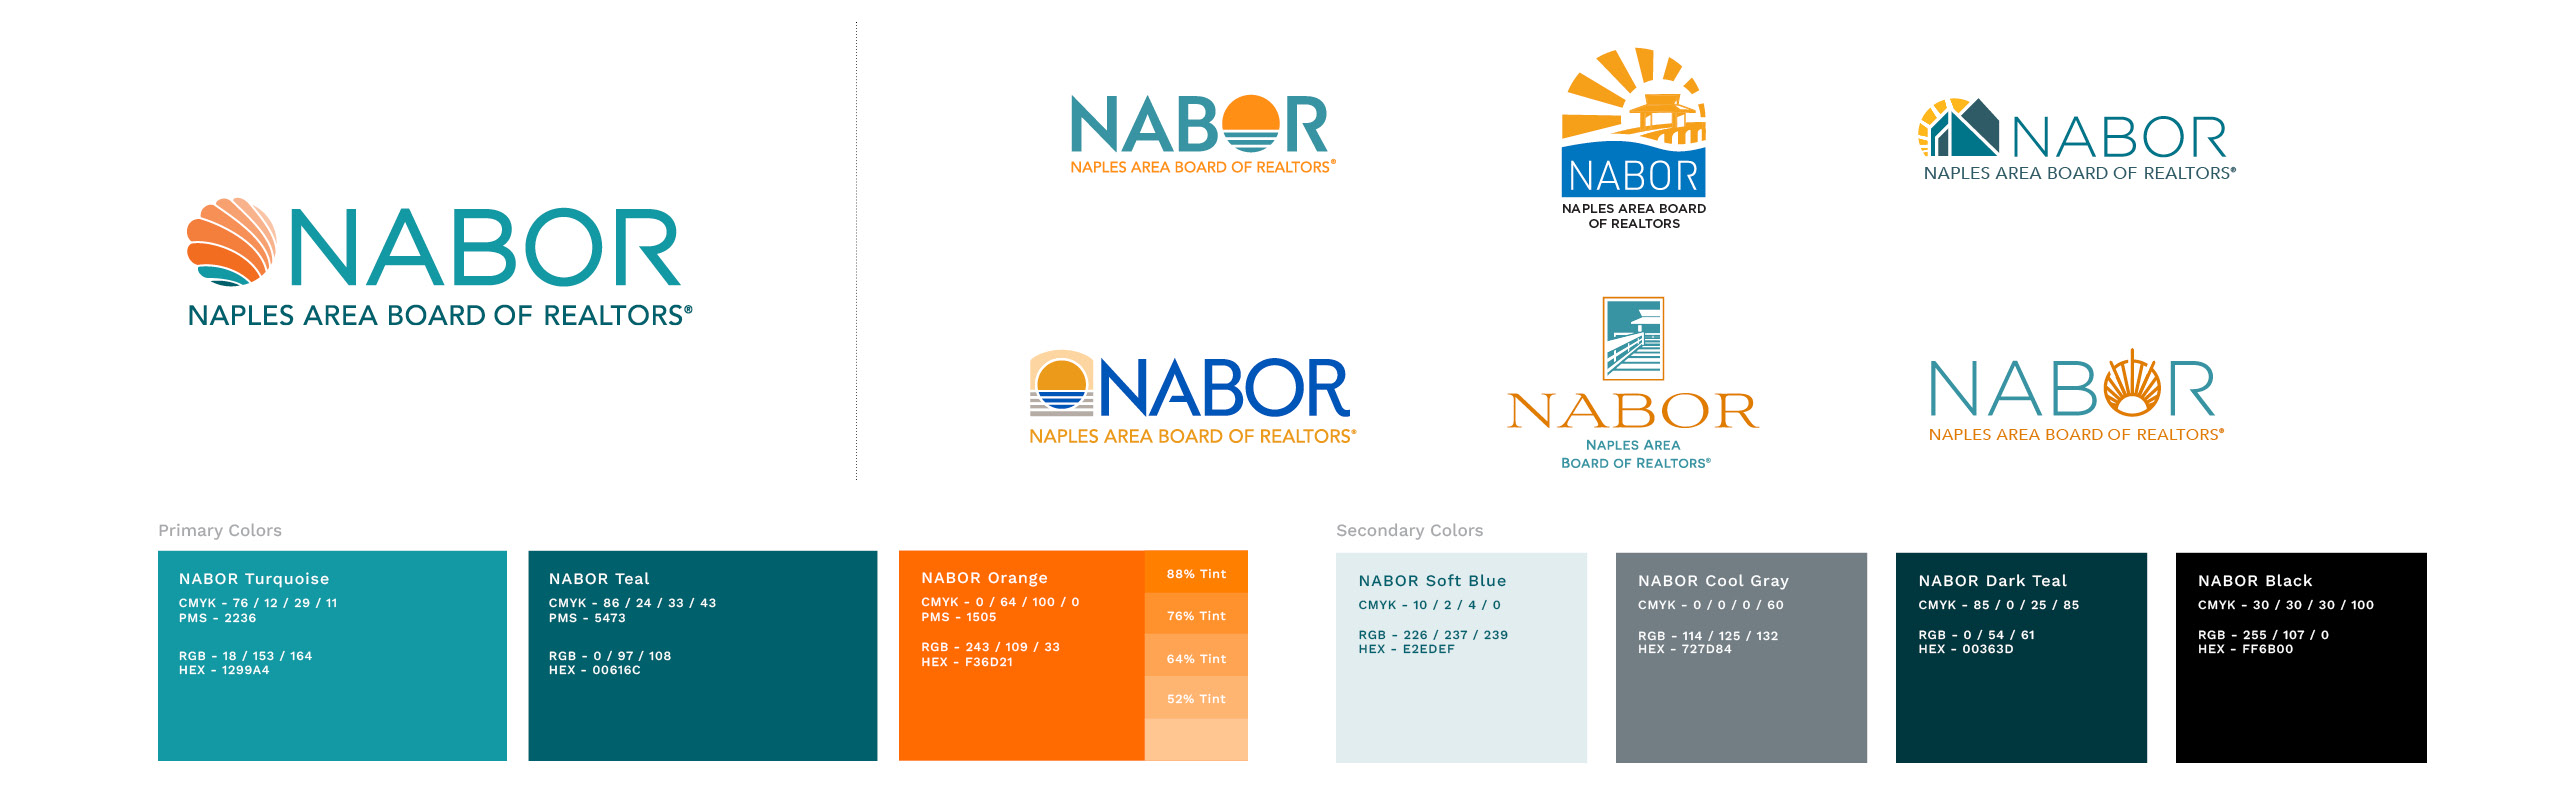 Nabor_Logos